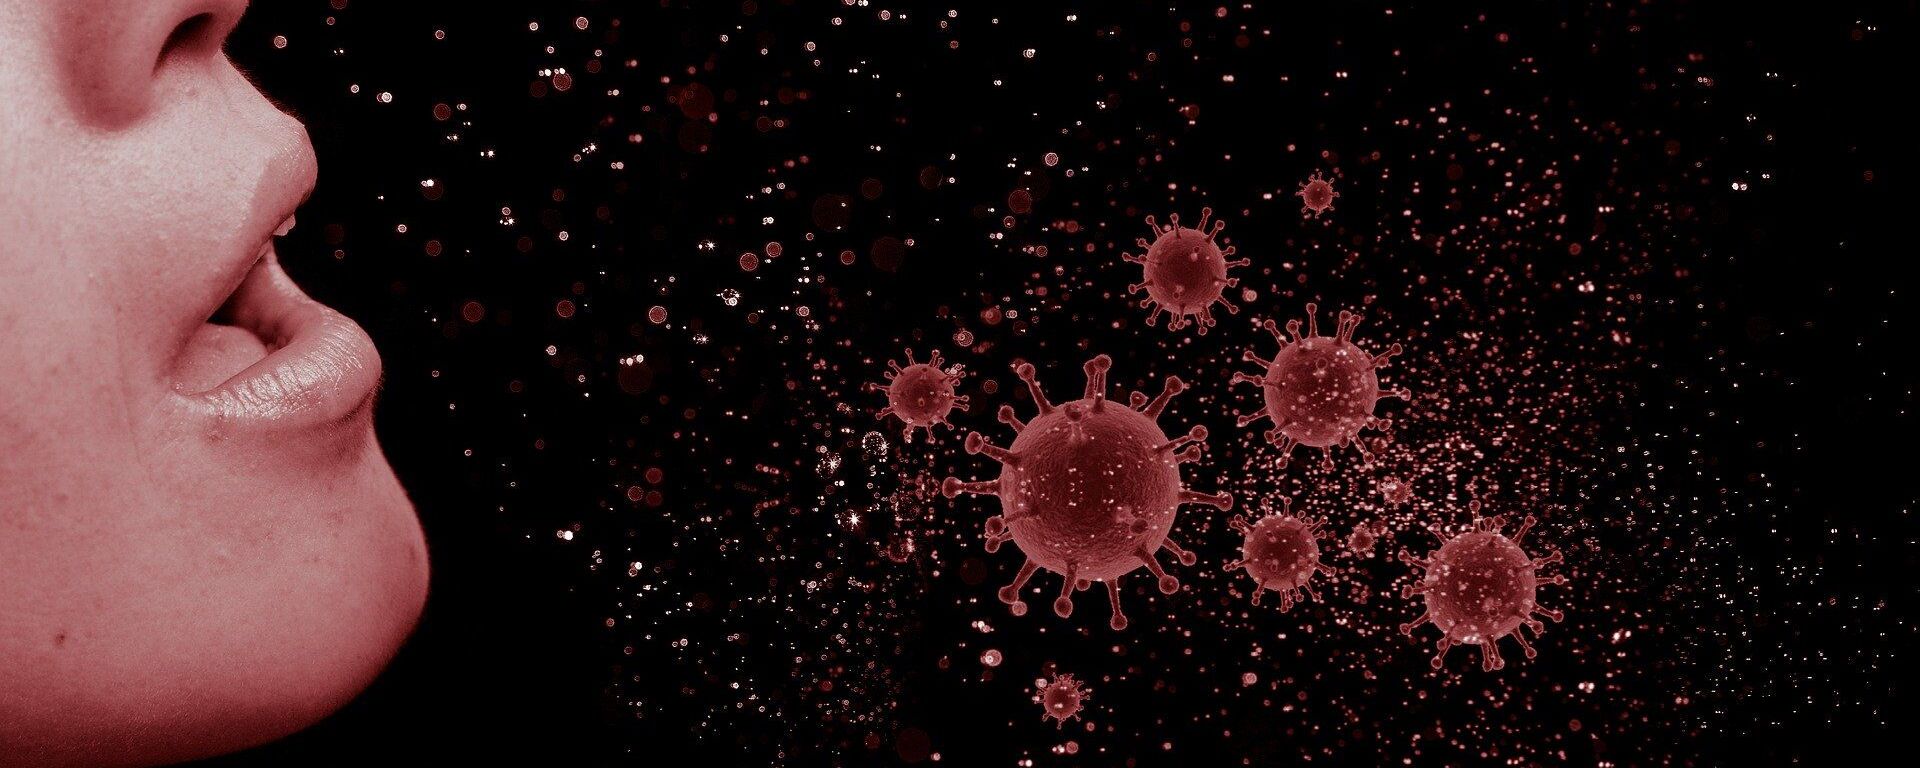 Coronavirus (imagen referencial) - Sputnik Mundo, 1920, 14.04.2020